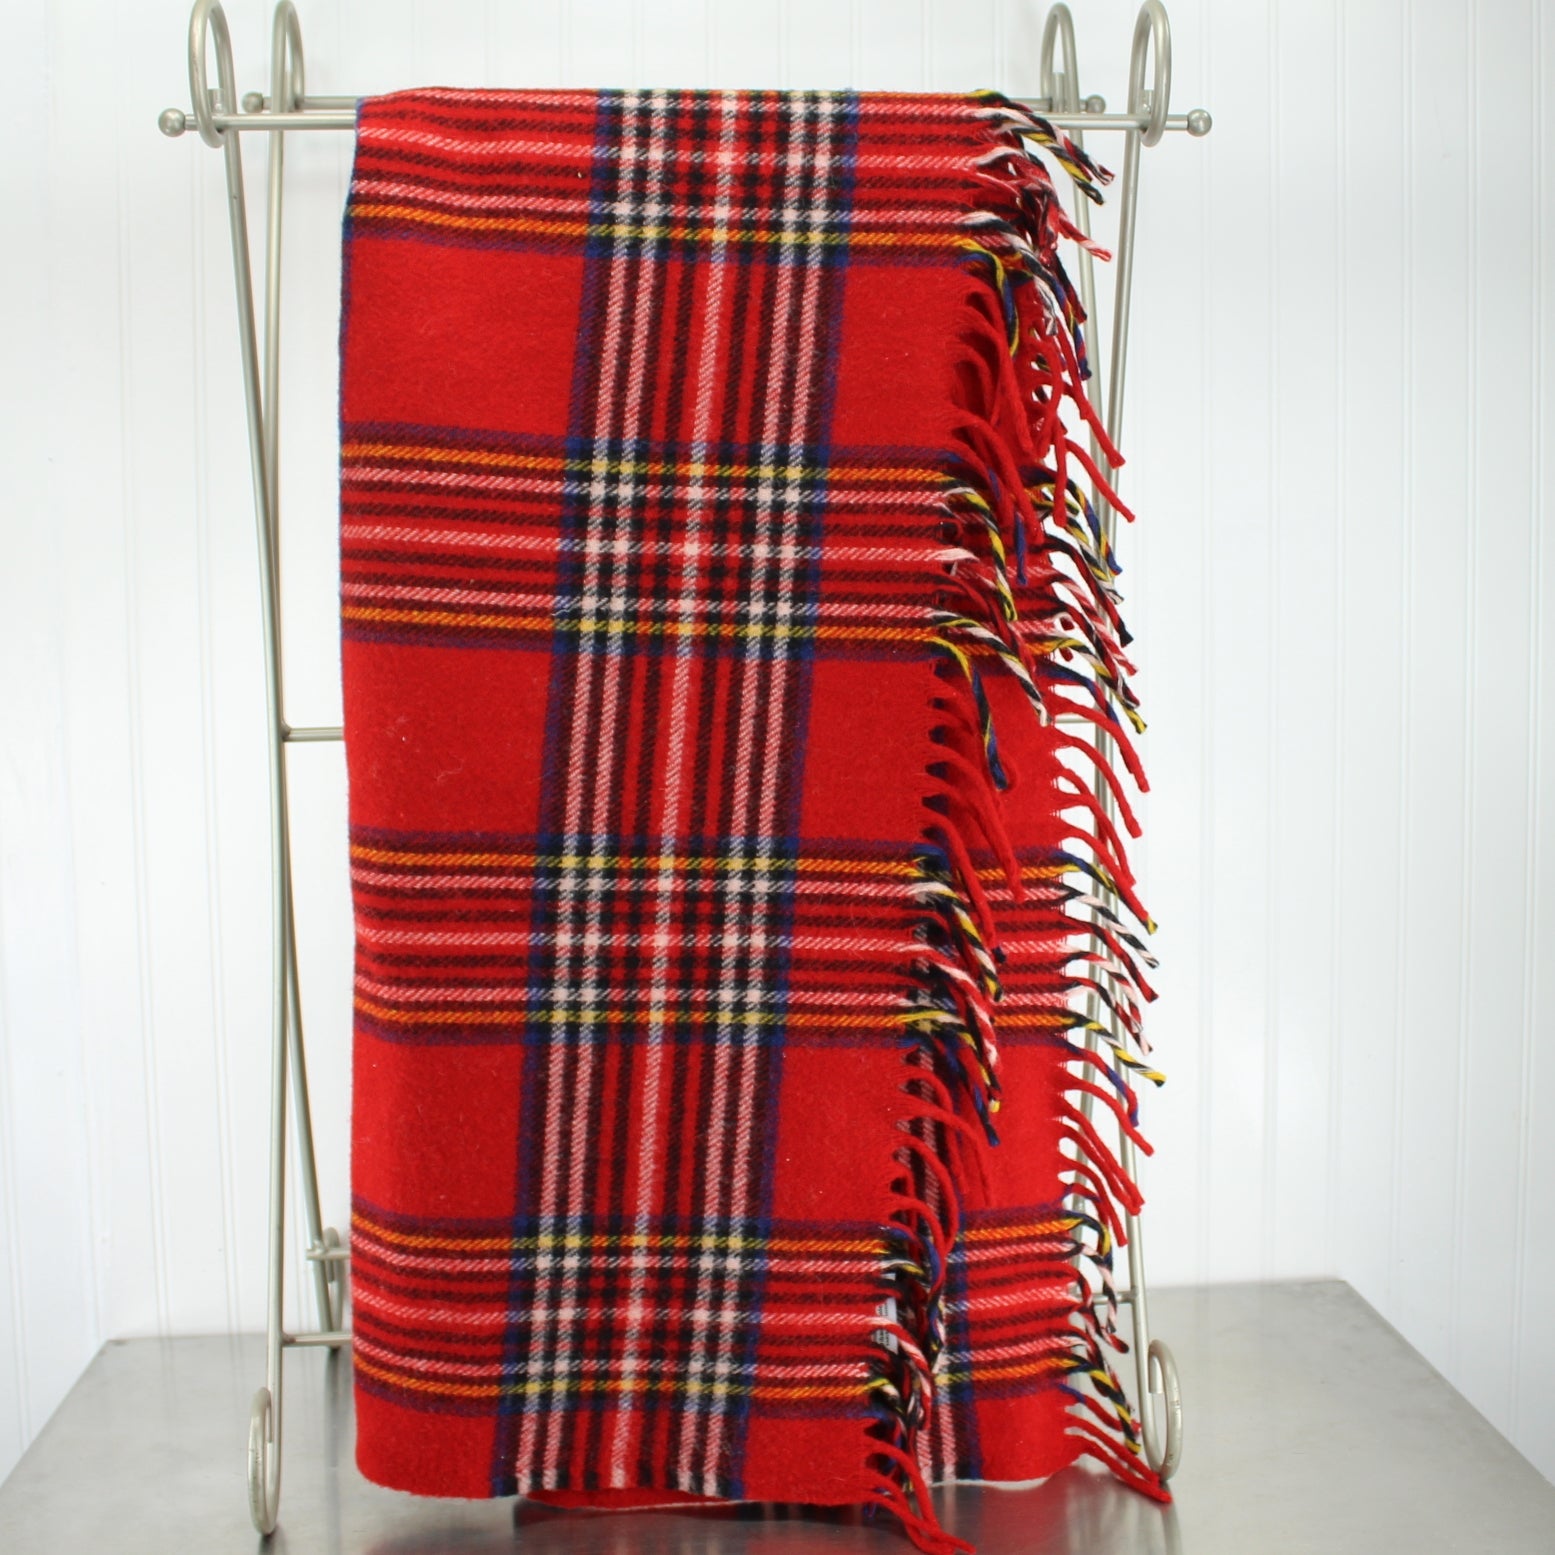 Faribo Classic Wool Throw Blanket Red Plaid - 54" by 50" USA sofa throw stadium blanket